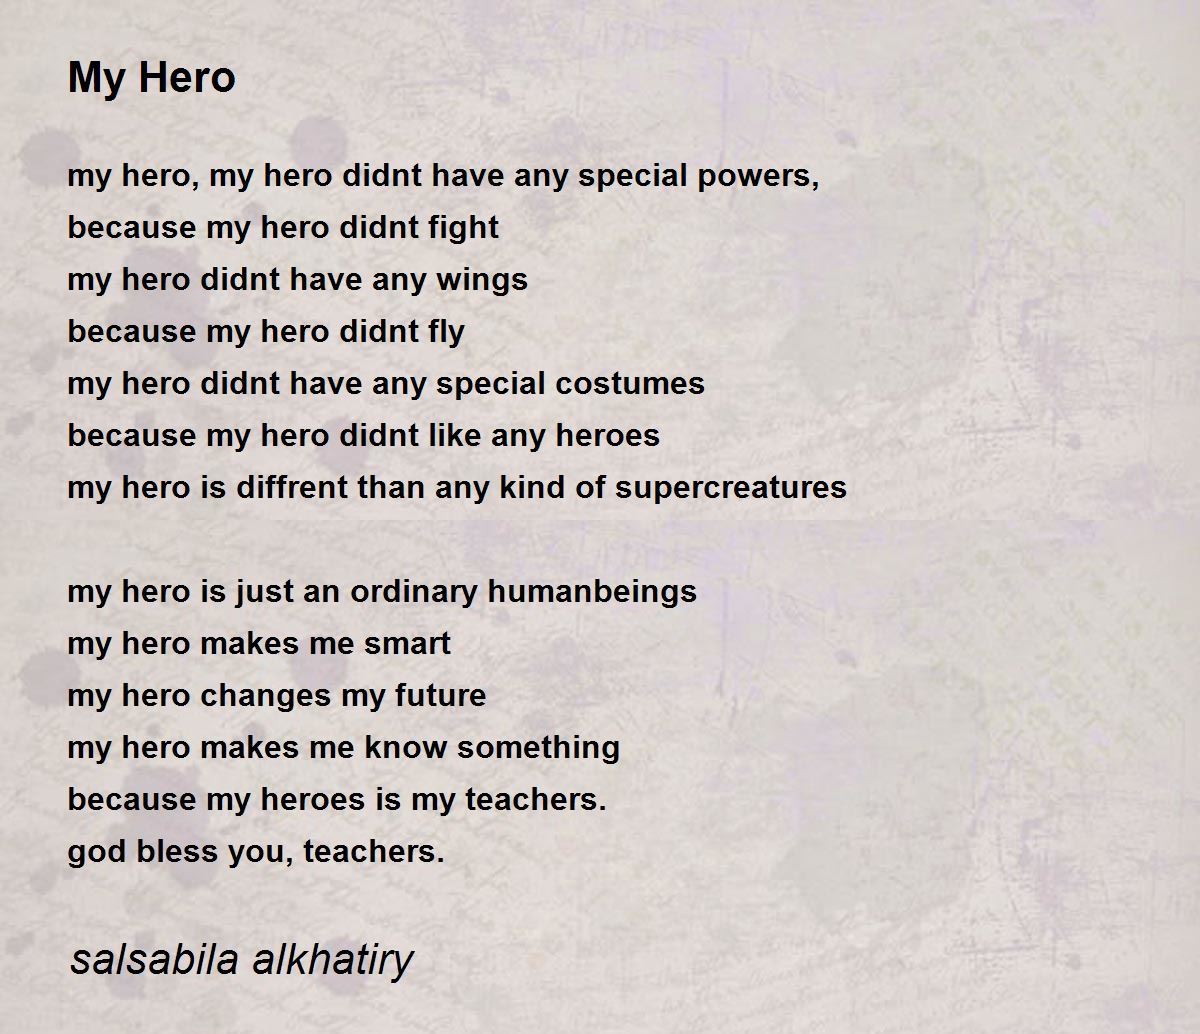 My hero is essay